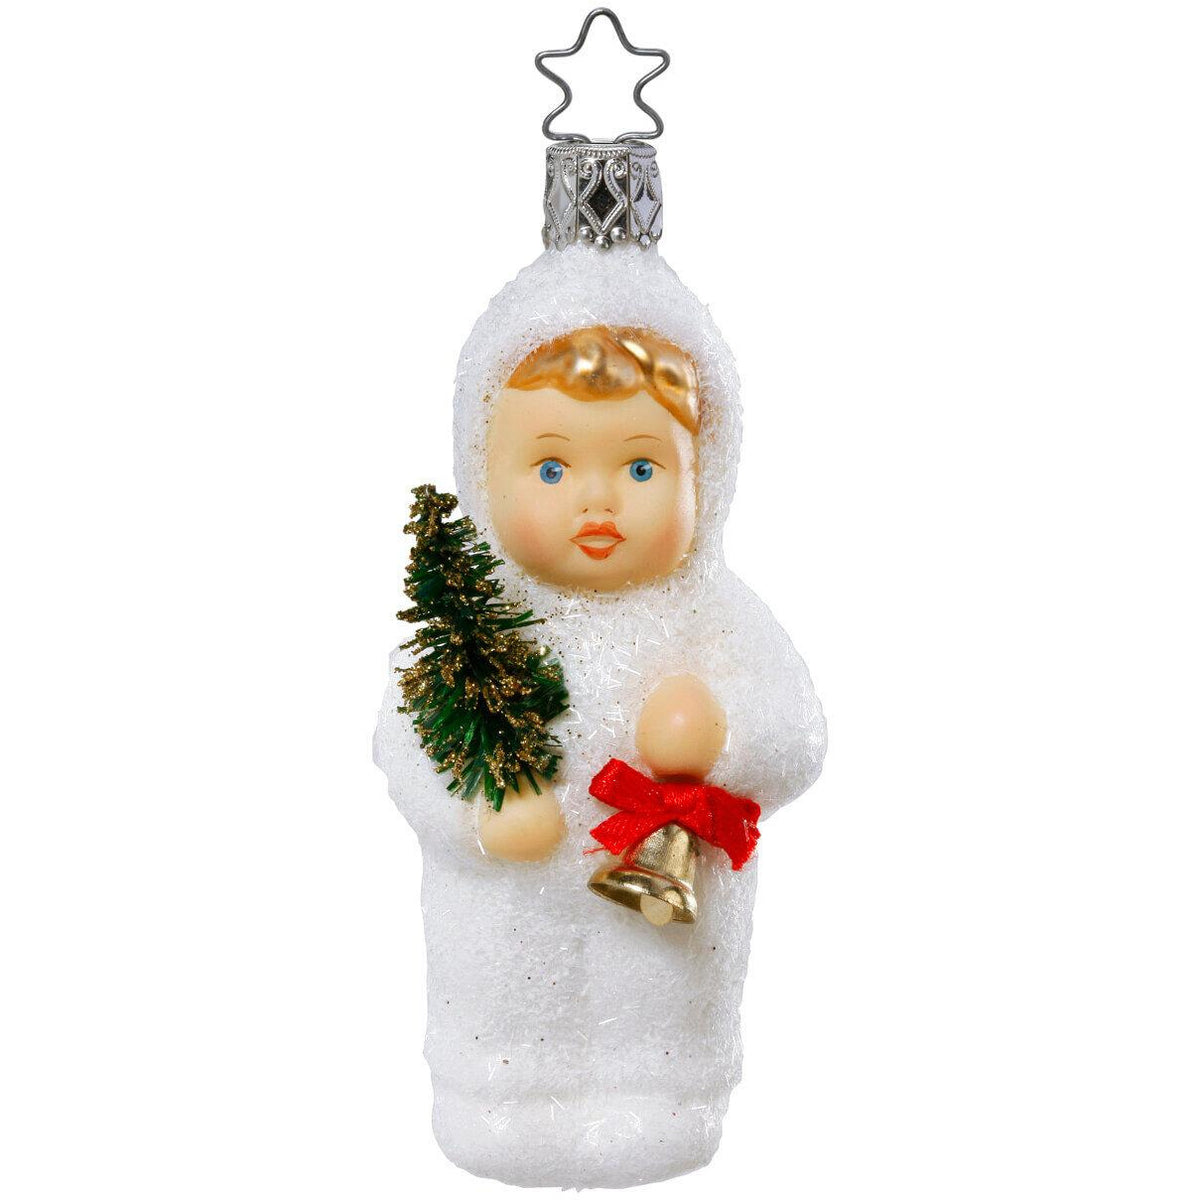 Kinder of Caroling Ornament - Zinnias Gift Boutique